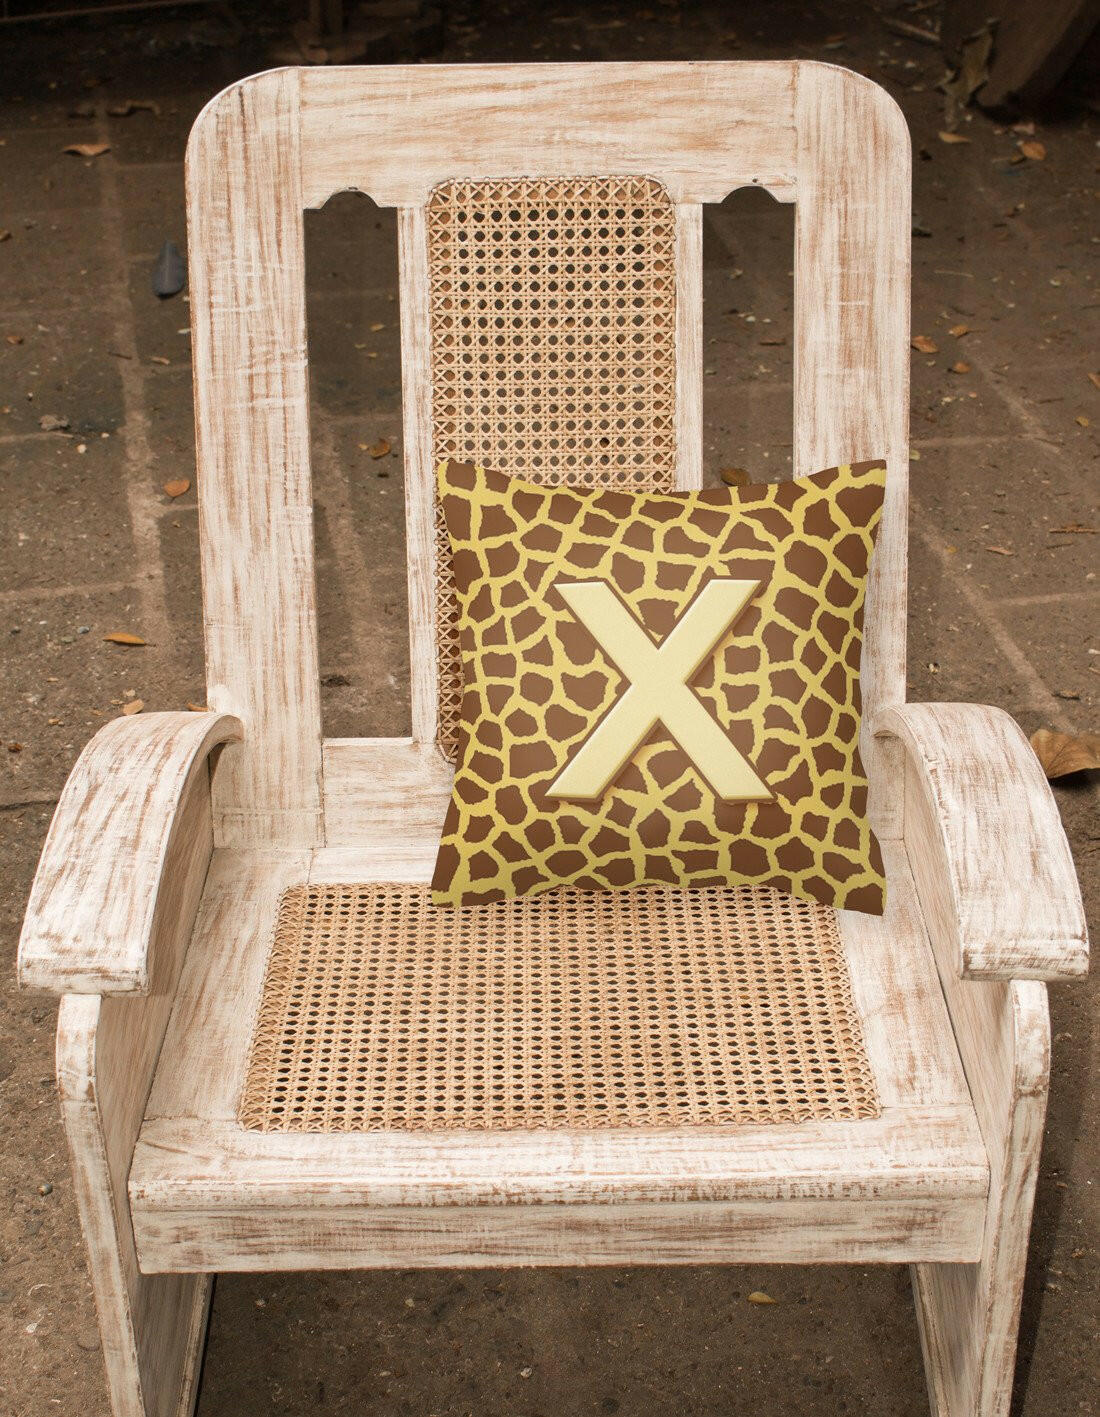 Monogram Initial X Giraffe Decorative   Canvas Fabric Pillow CJ1025 - the-store.com